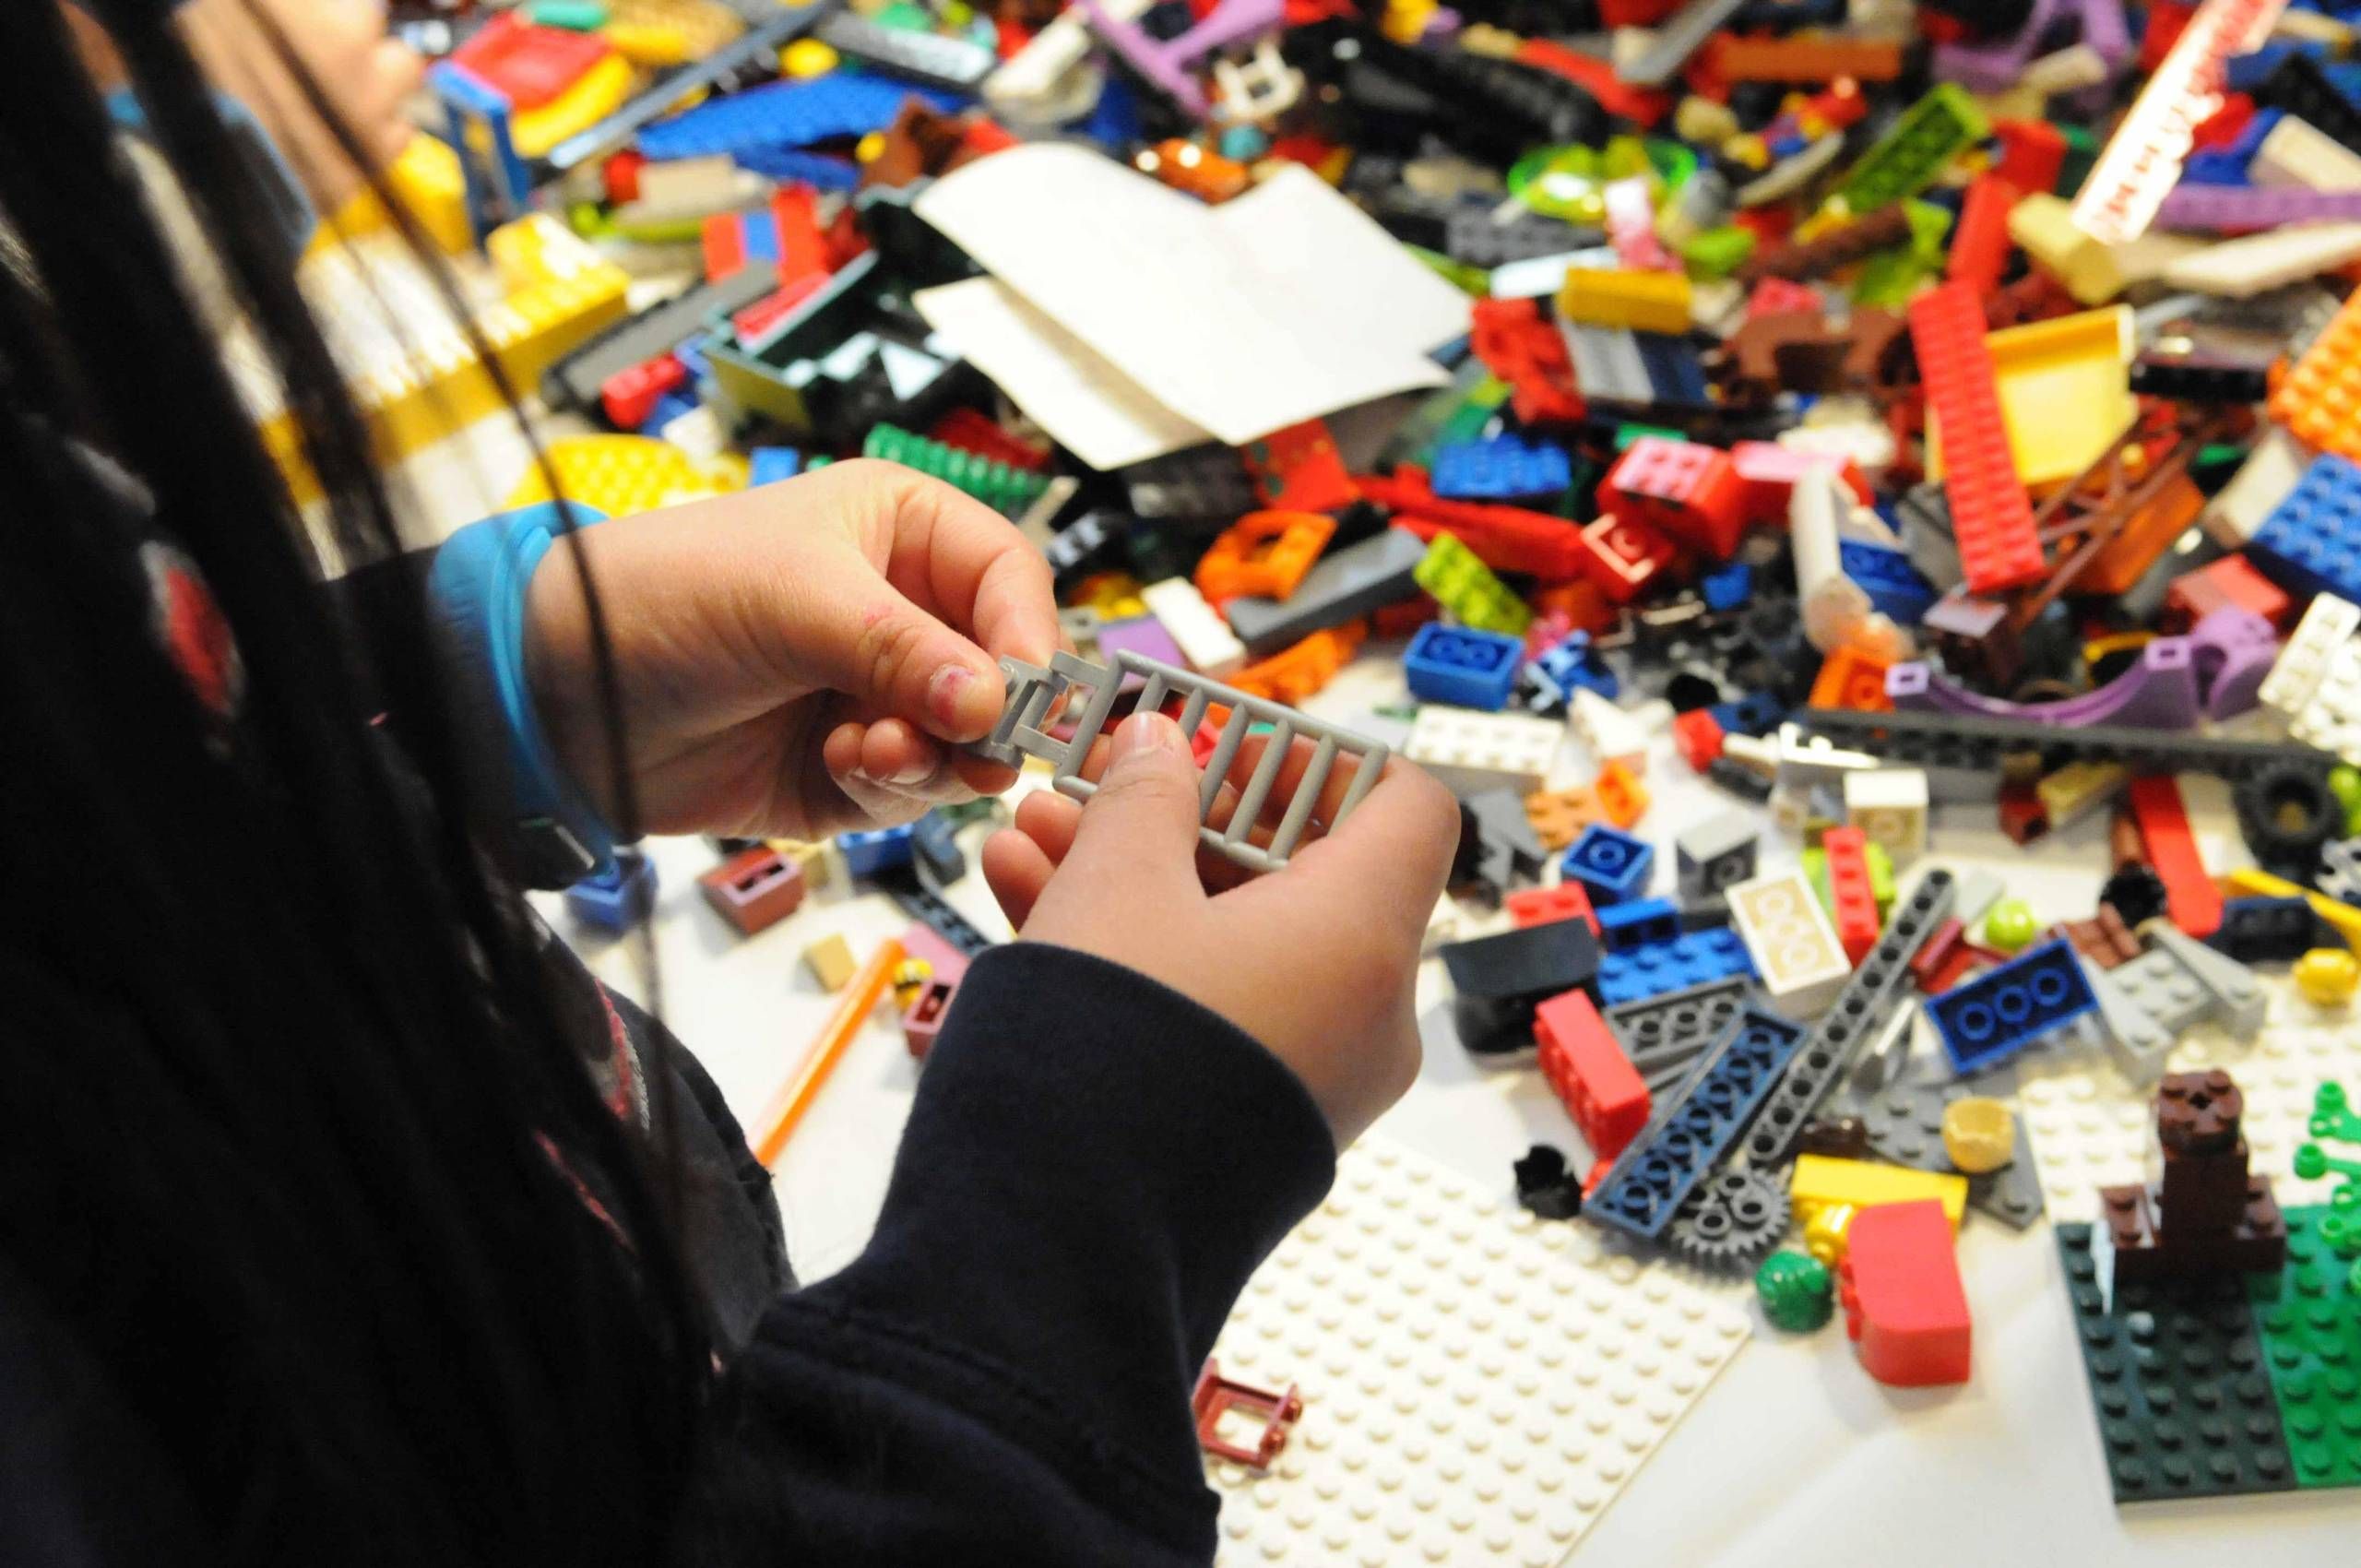 Lego-chef: Her forklaringen vores succes